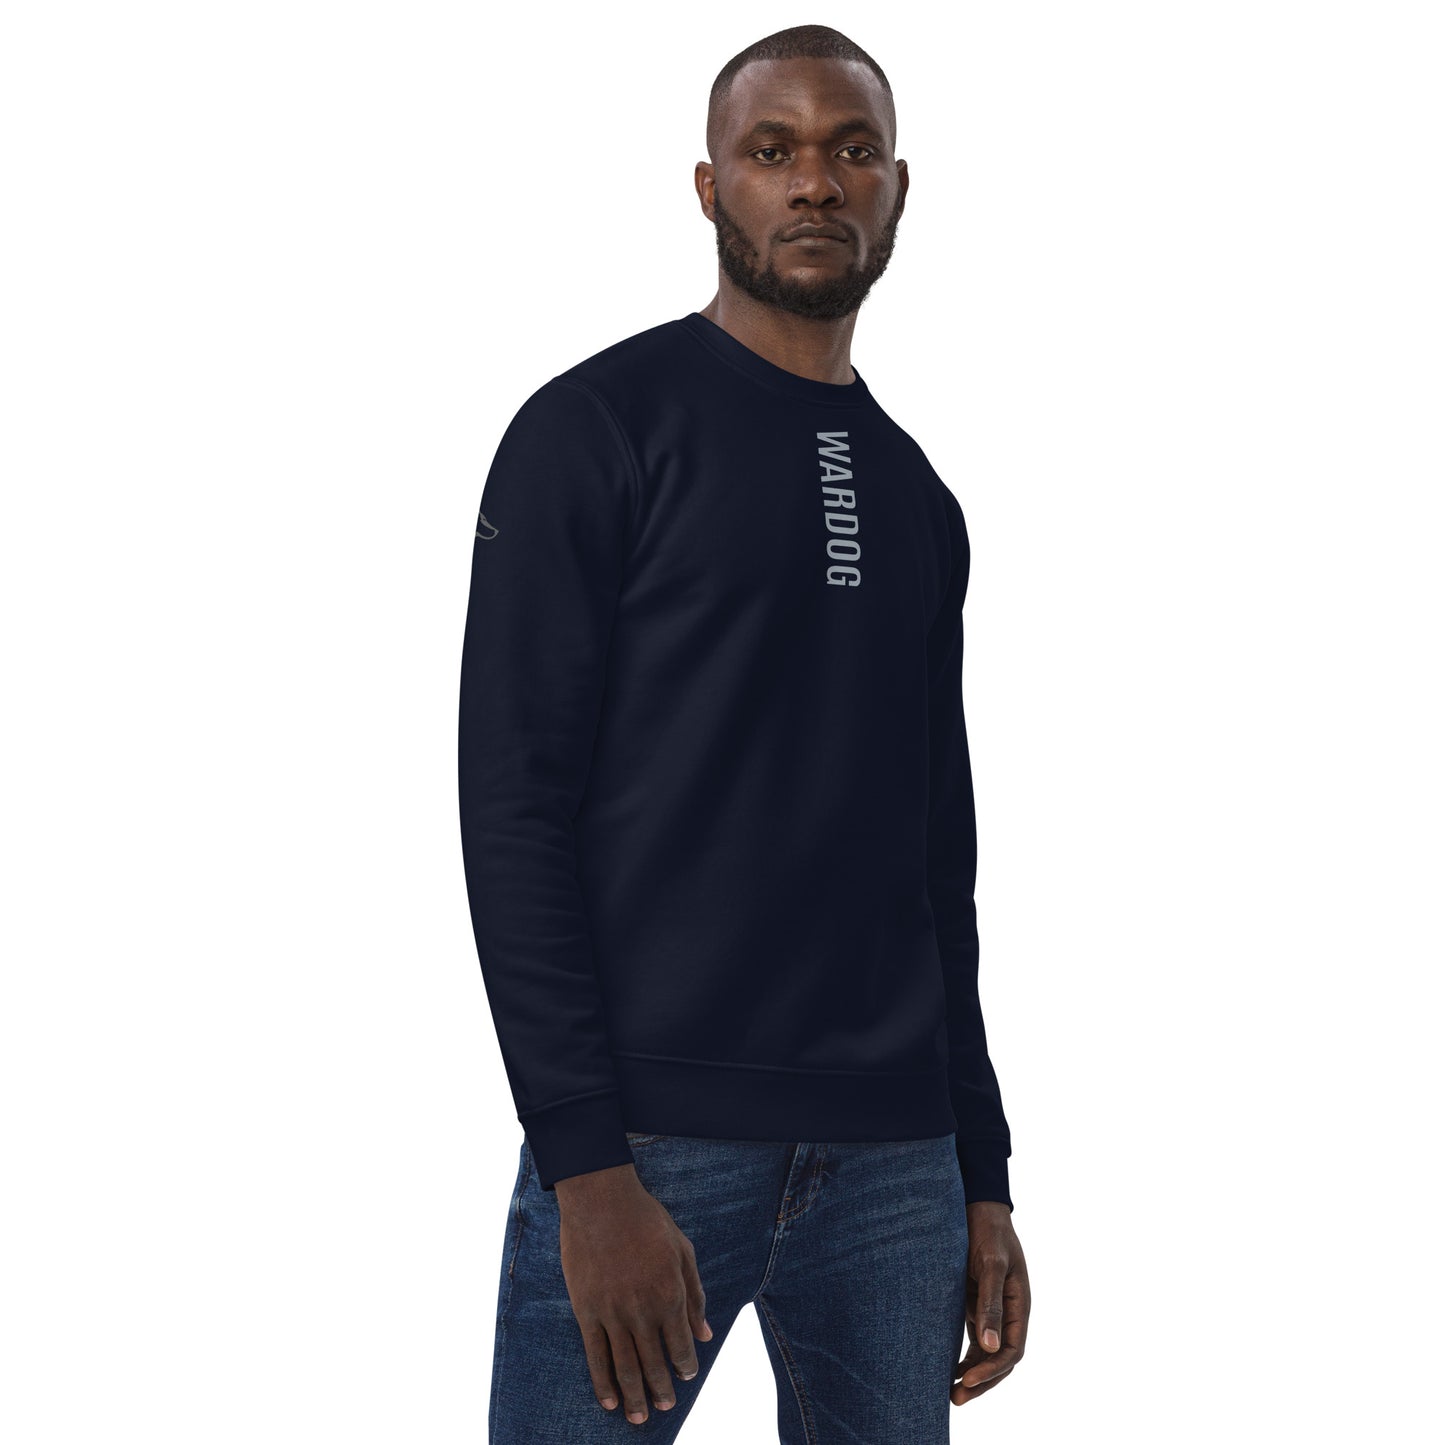 Unisex WARDOG sweatshirt